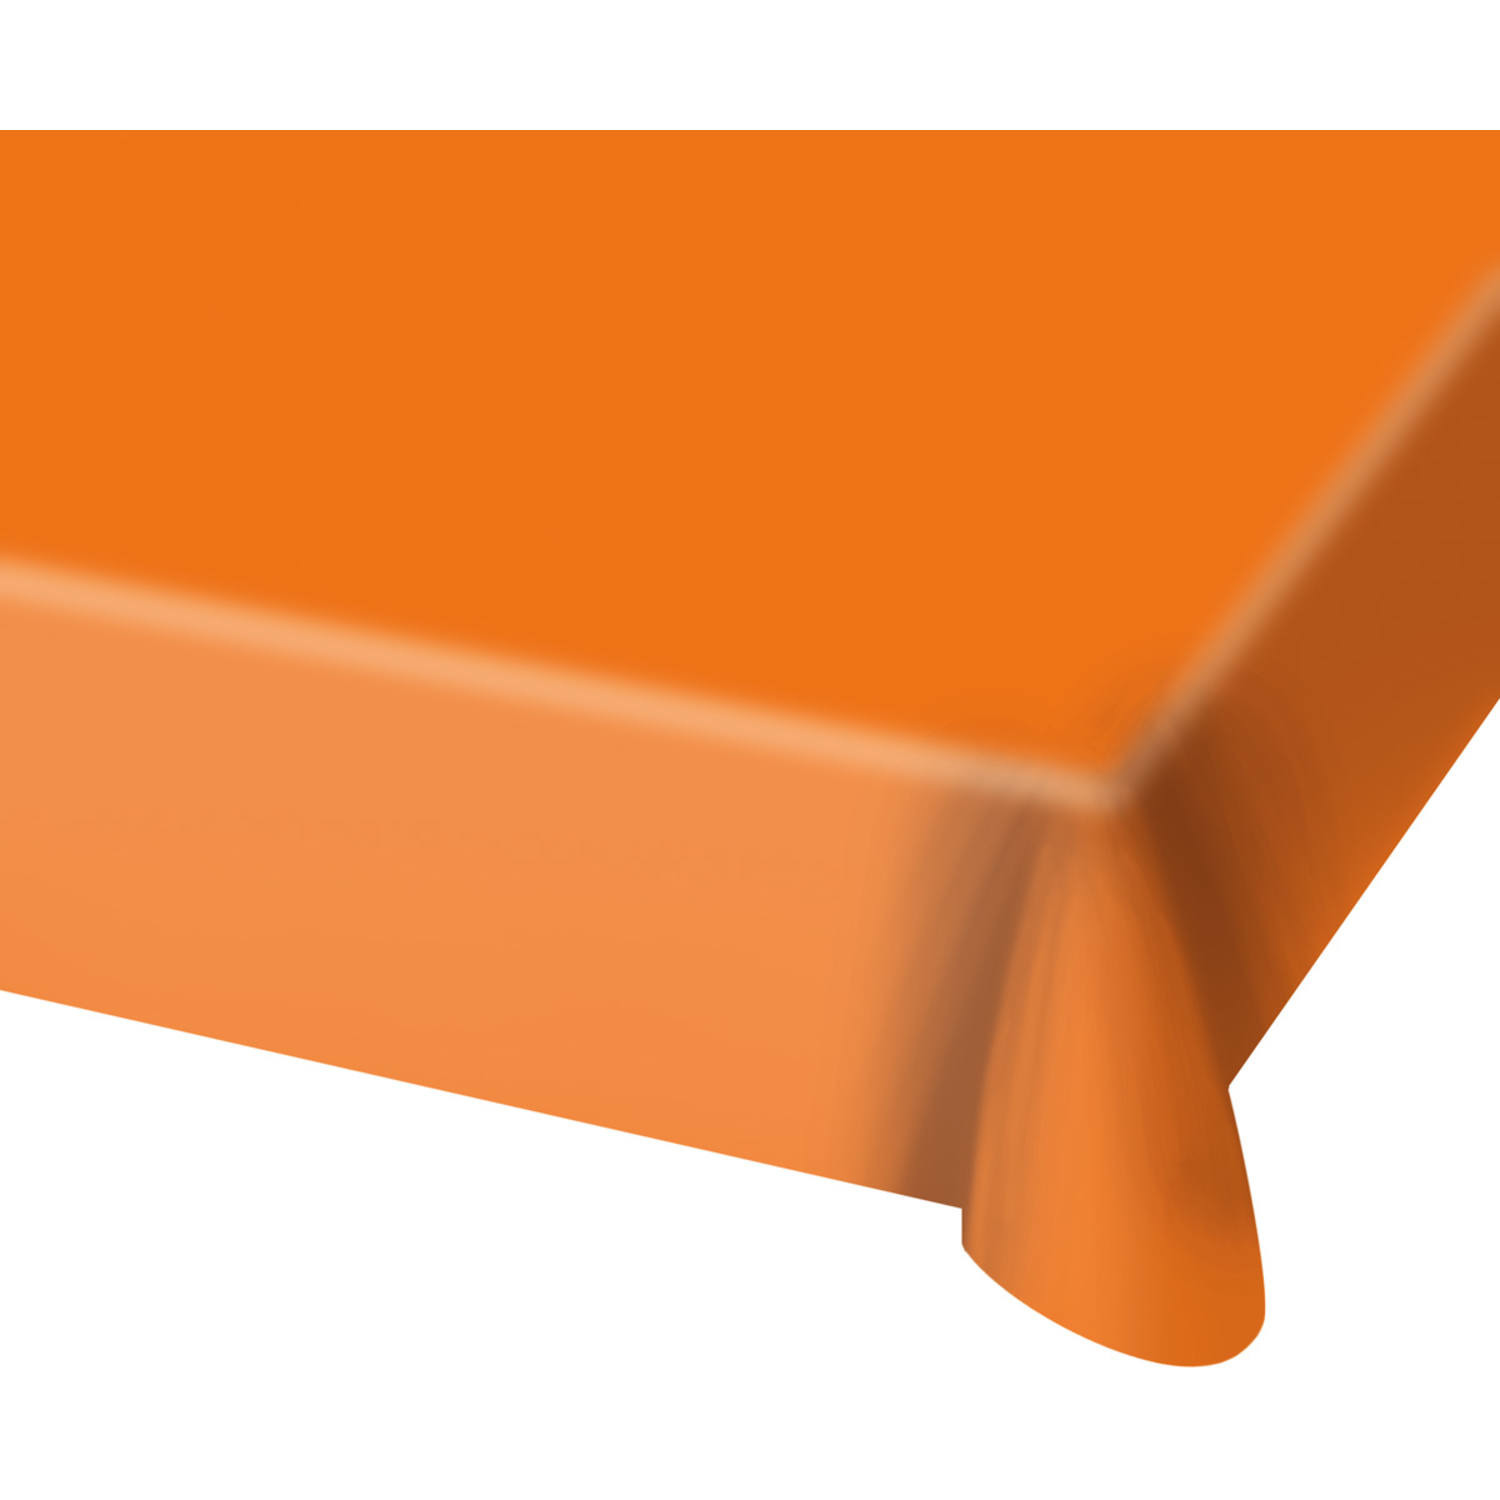 3x stuks tafelkleed van plastic oranje 130 x 180 cm